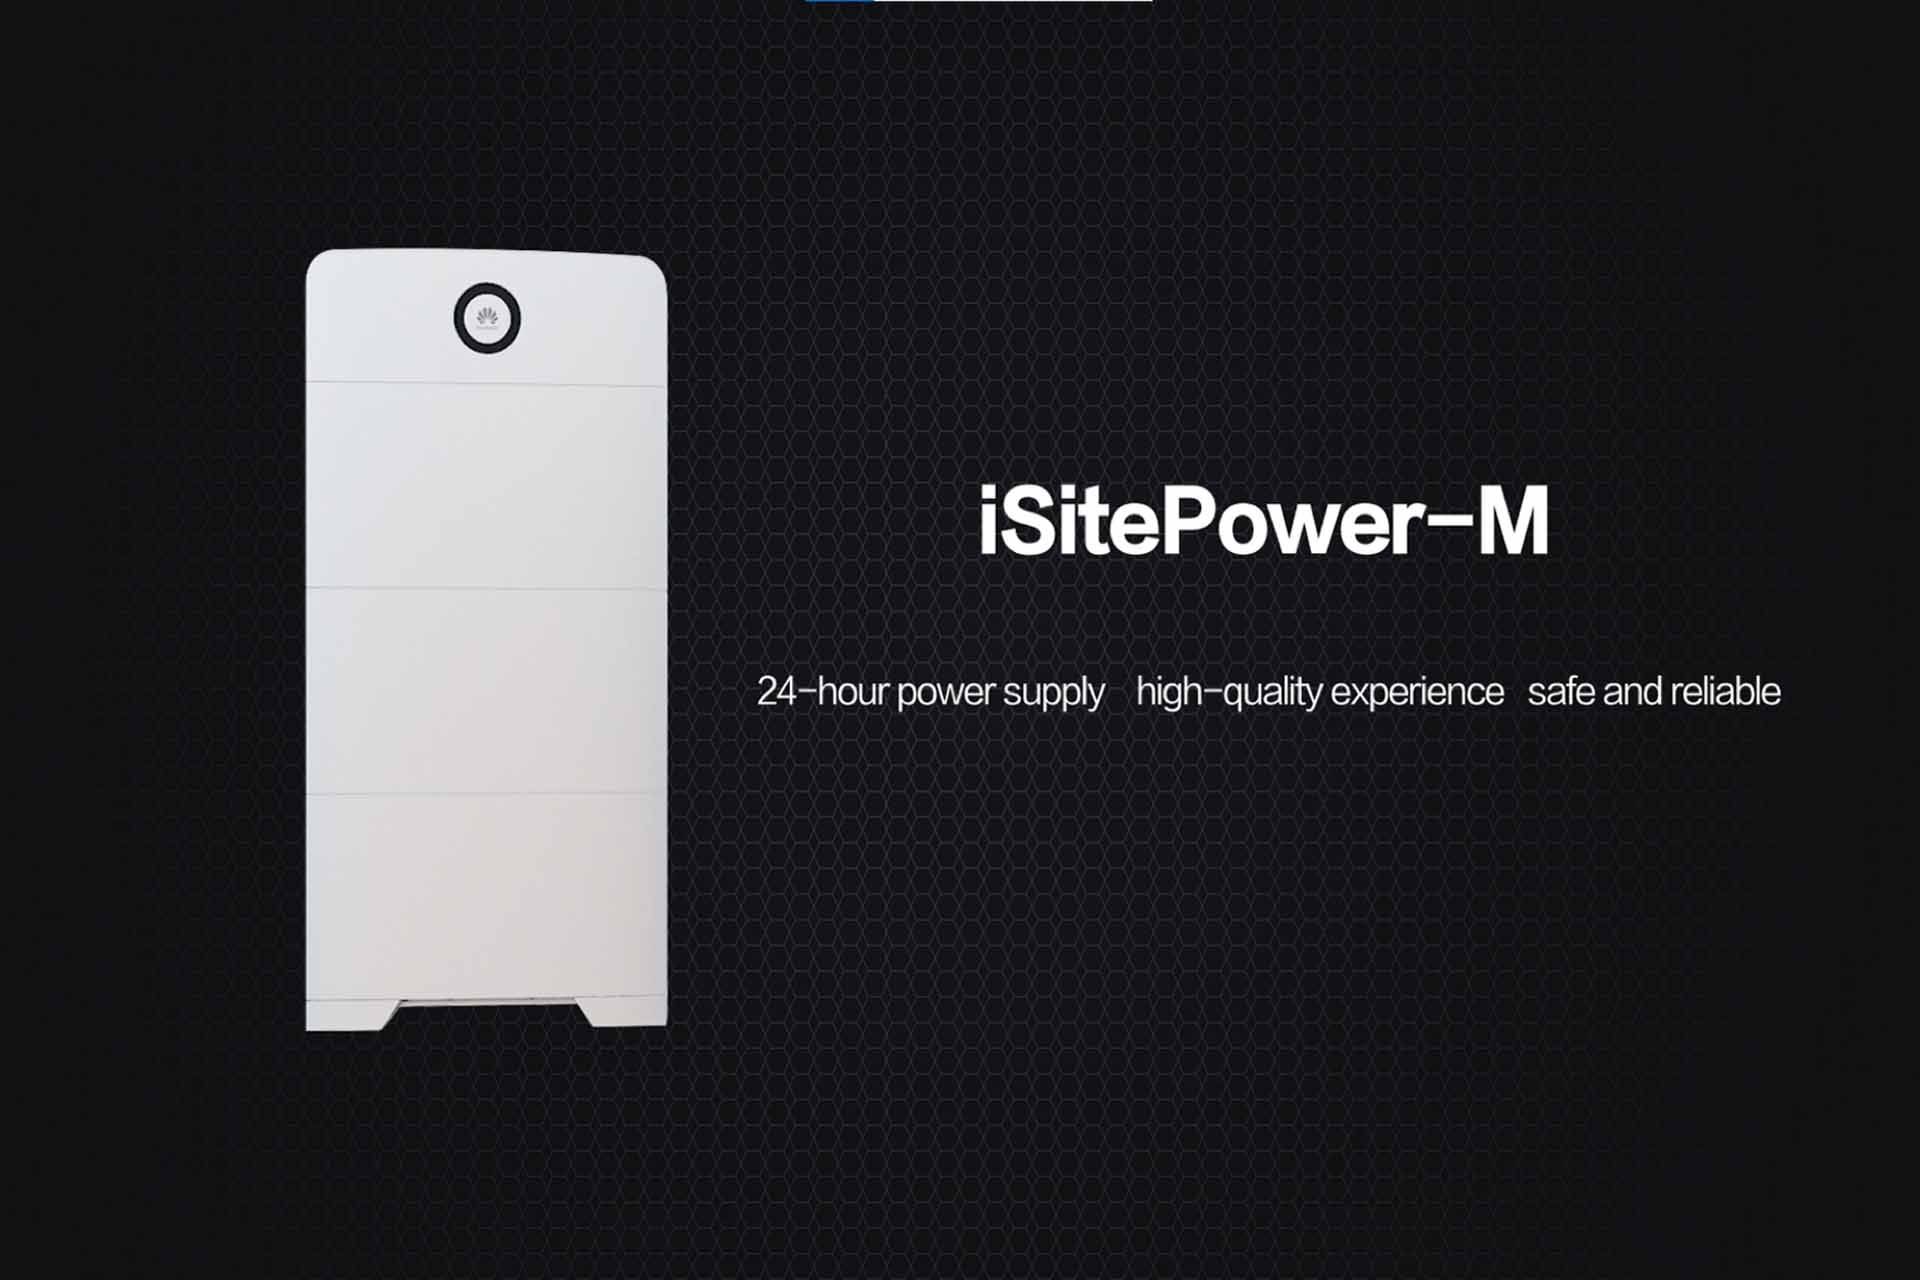 iSitePower-M